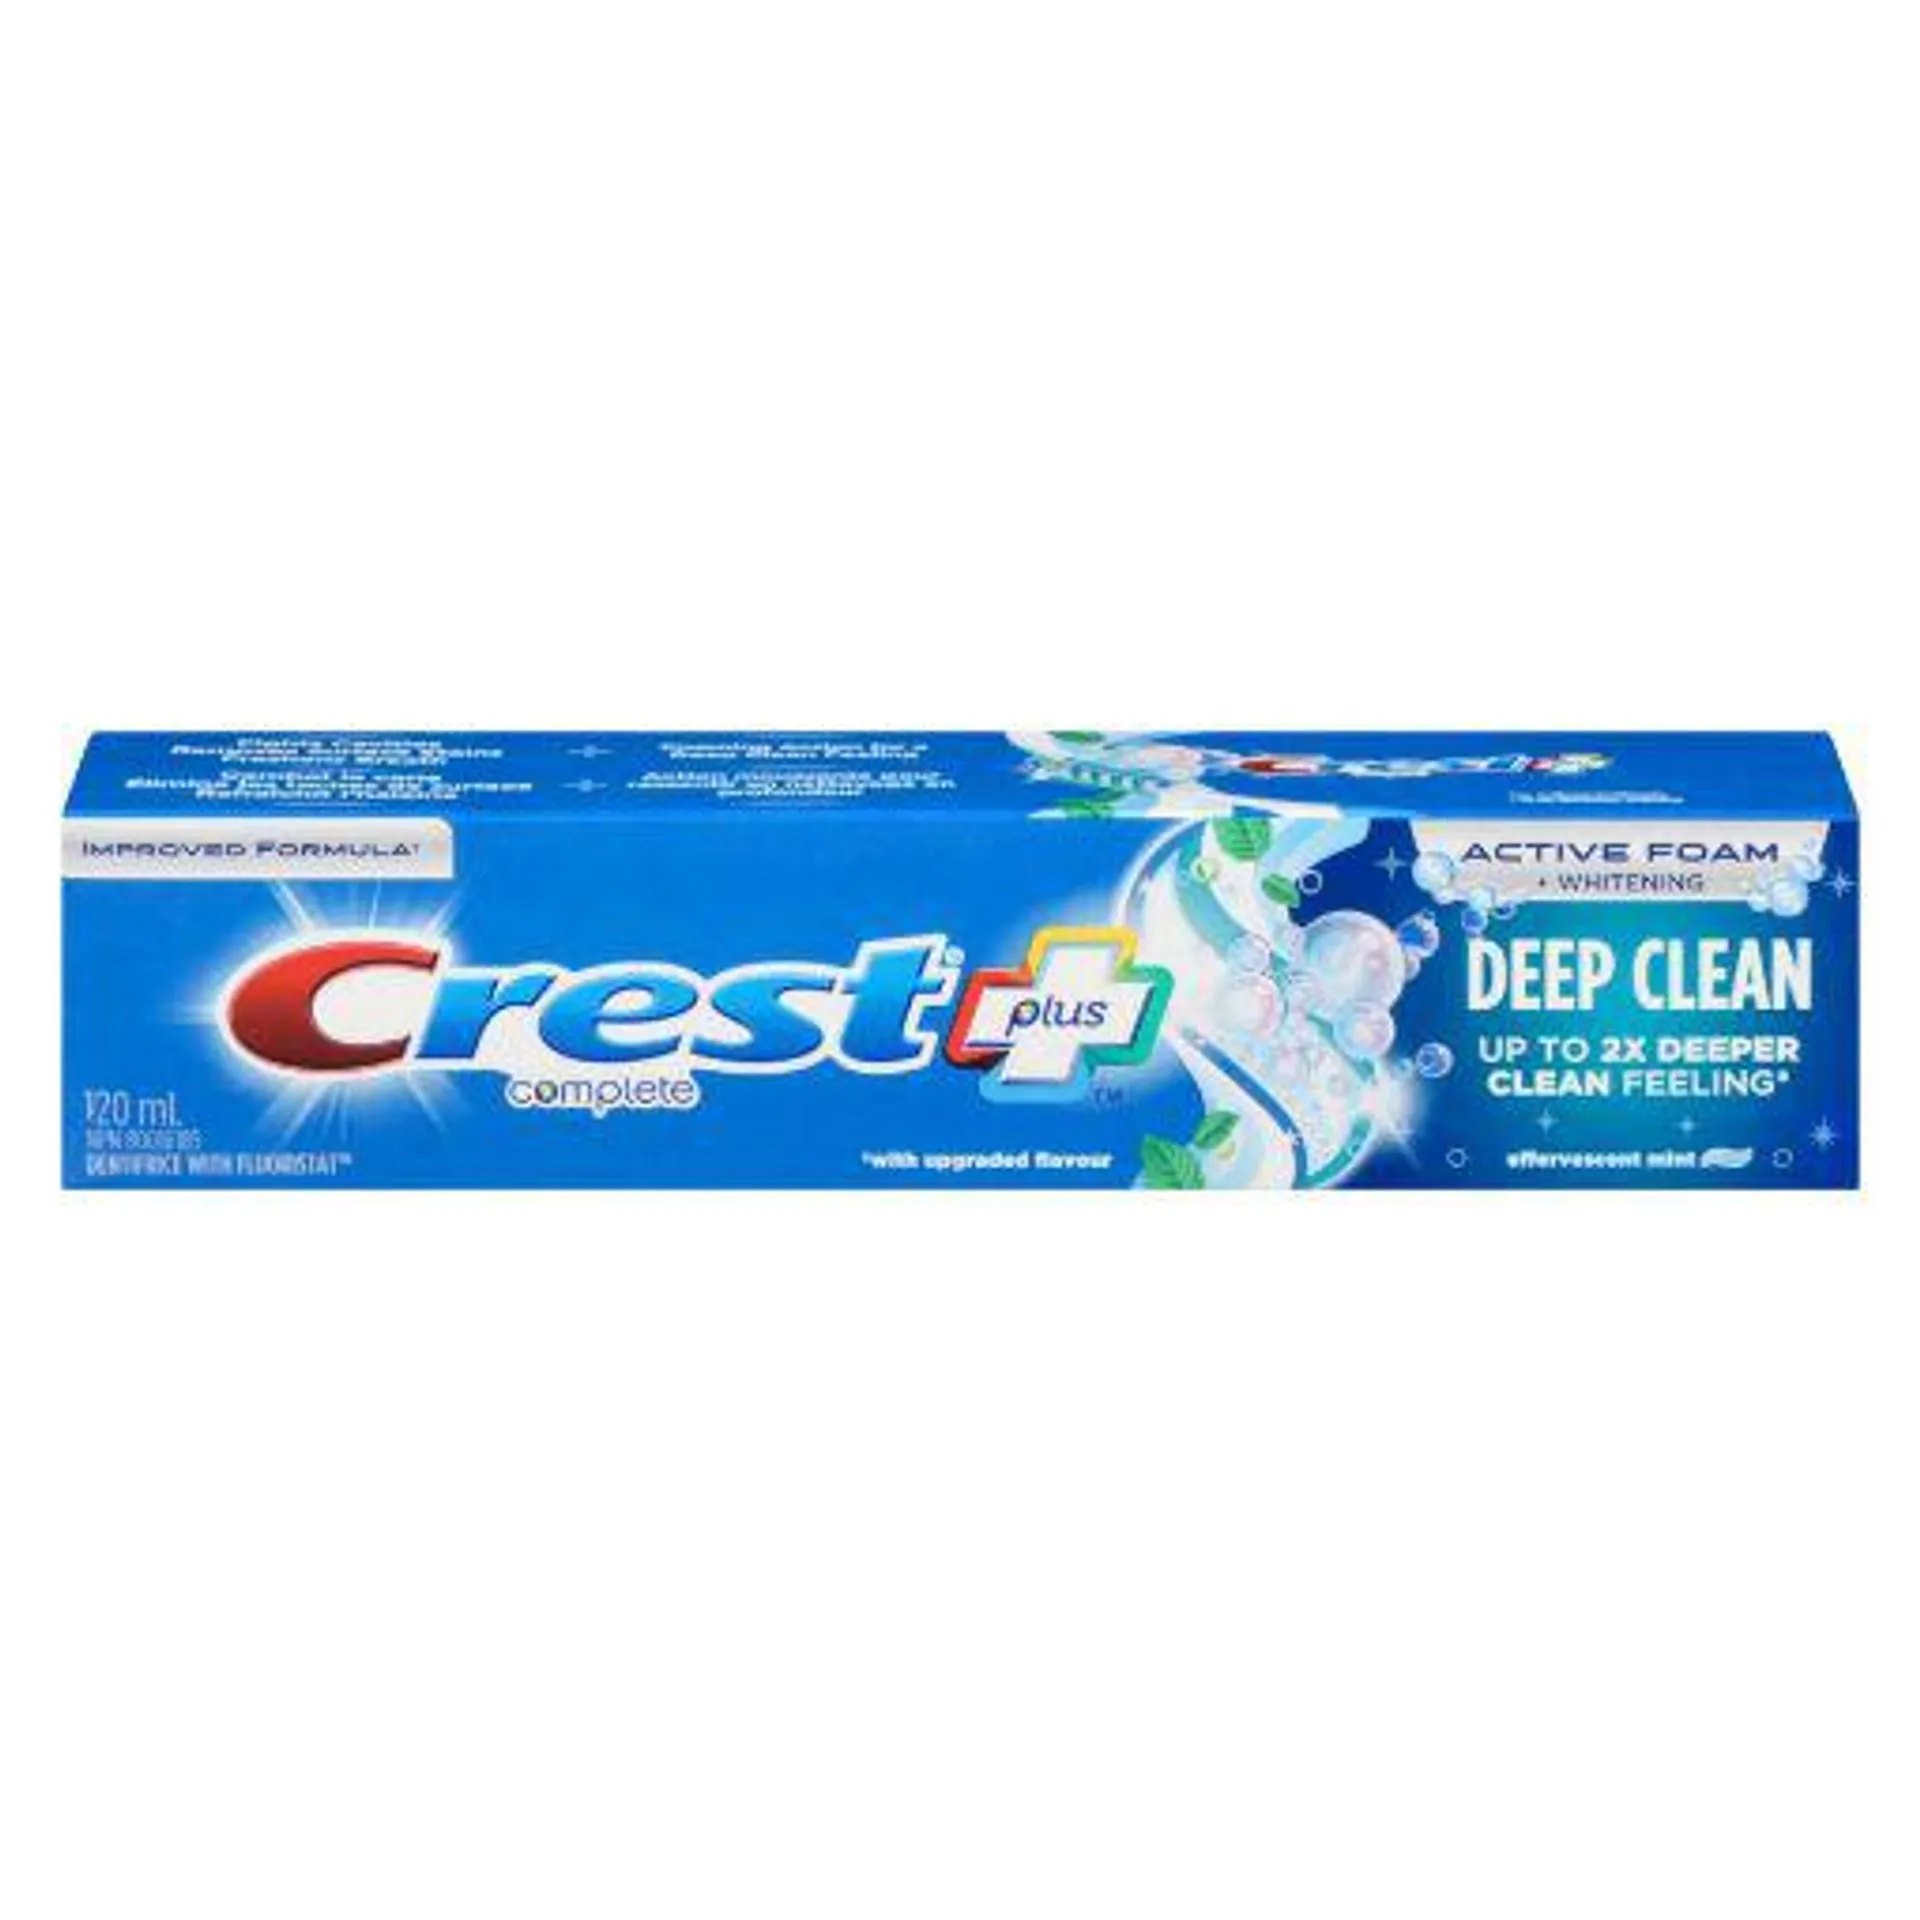 CREST COMPLETE WHITENING + DEEP CLEAN TOOTHPASTE - EFFERVESCENT MINT 120ML